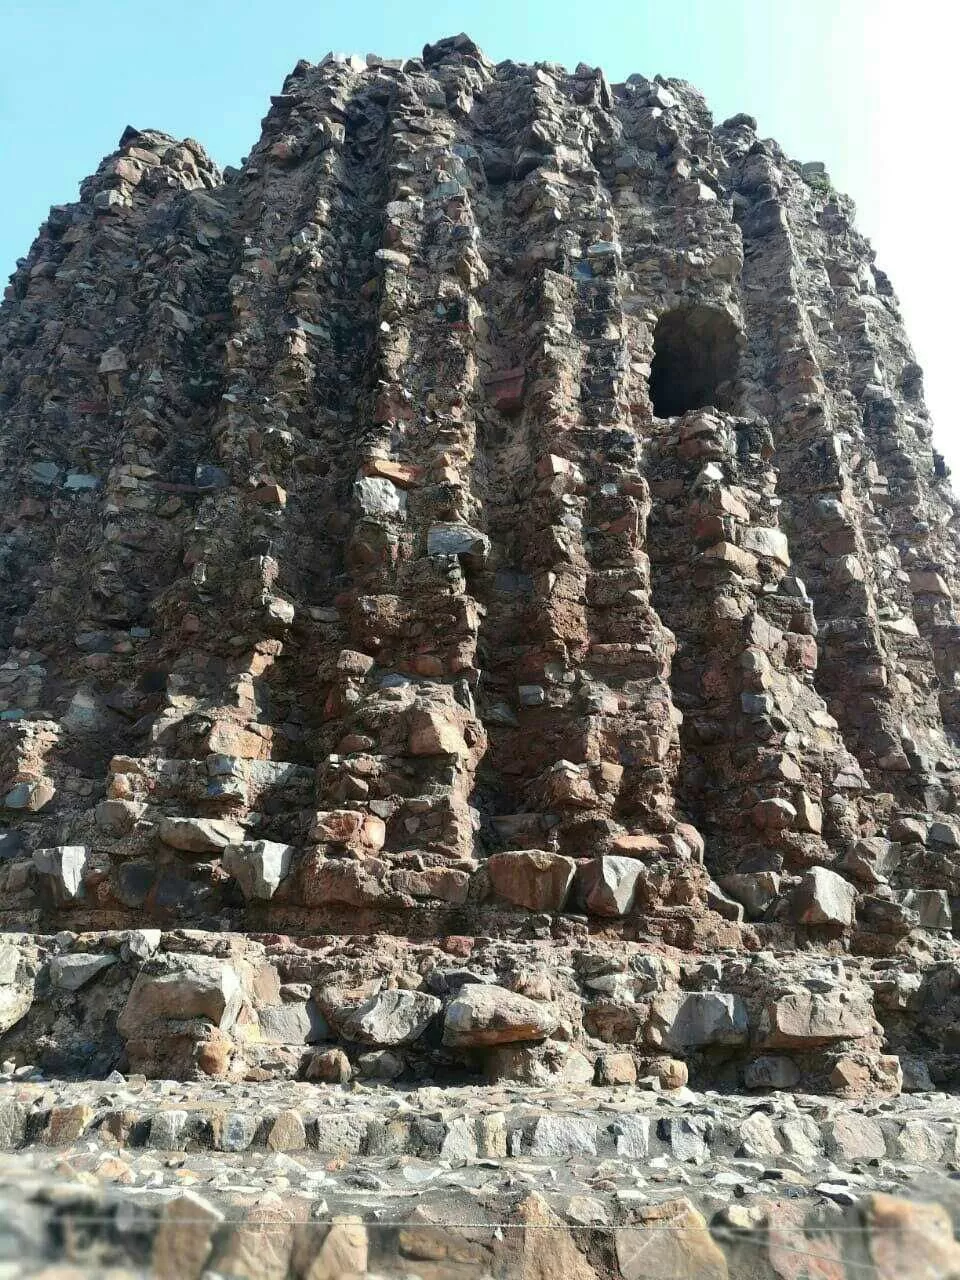 Photo of Qutub Minar By Tushar Parihar